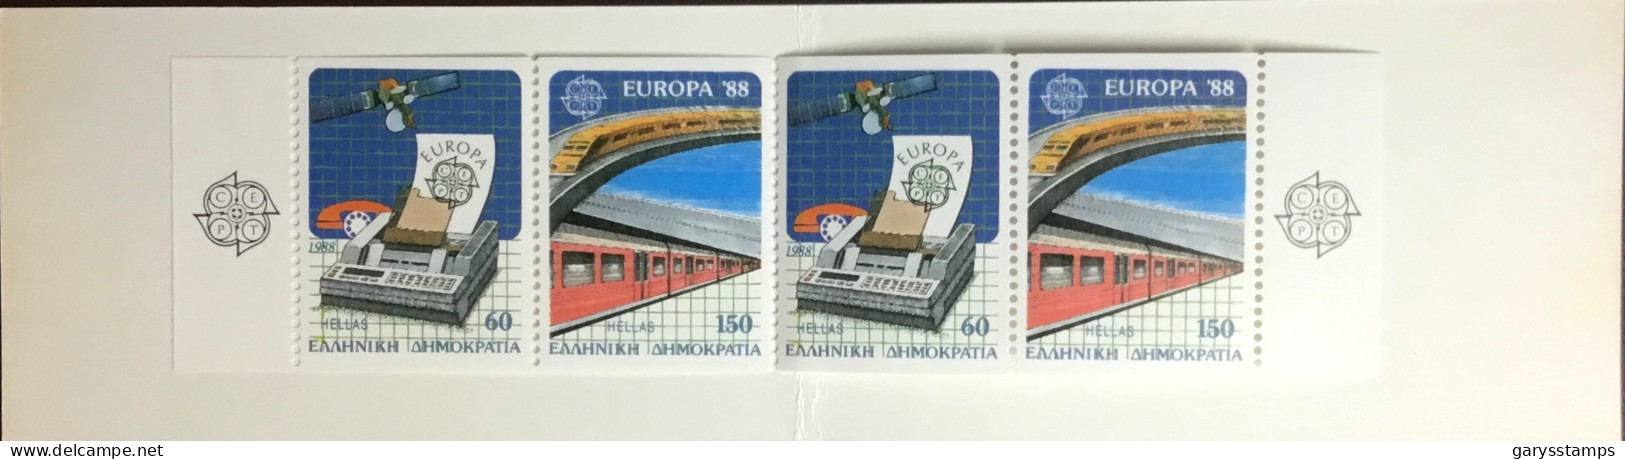 Greece 1988 Europa Booklet Unused - Markenheftchen